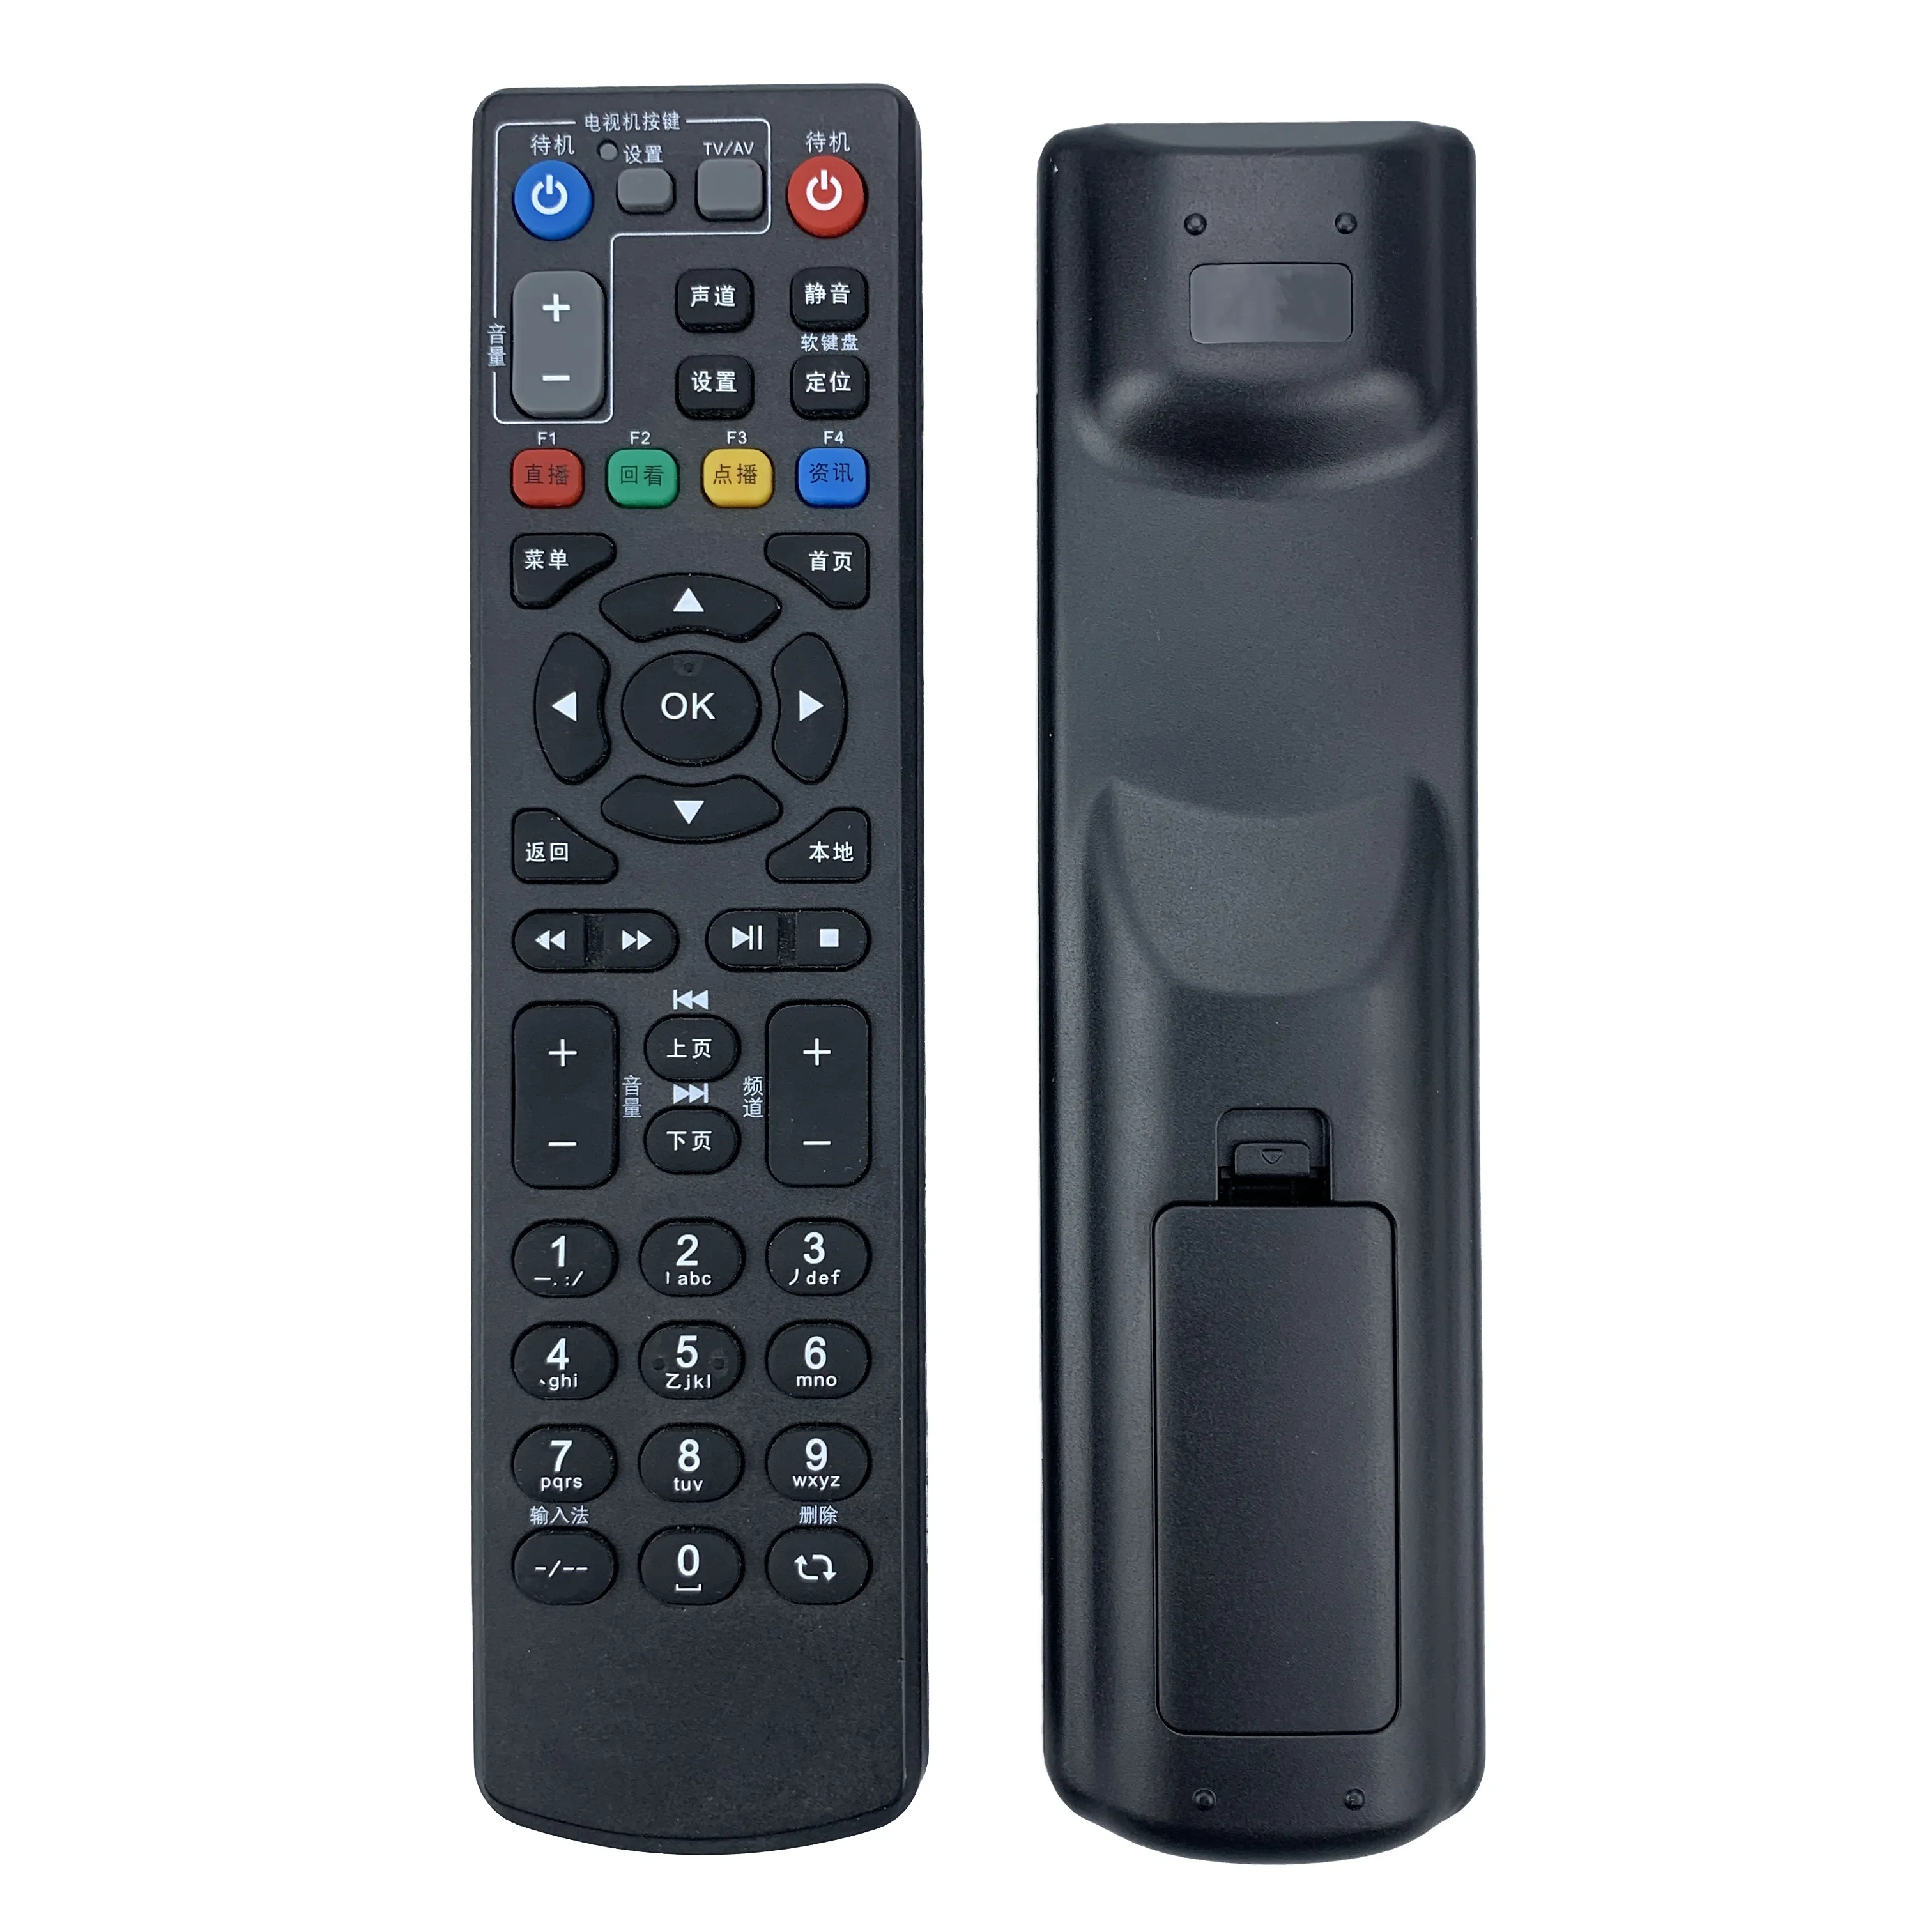 Mando a distancia Universal para Smart Home Tv, Control Remoto Portátil con 45 botones